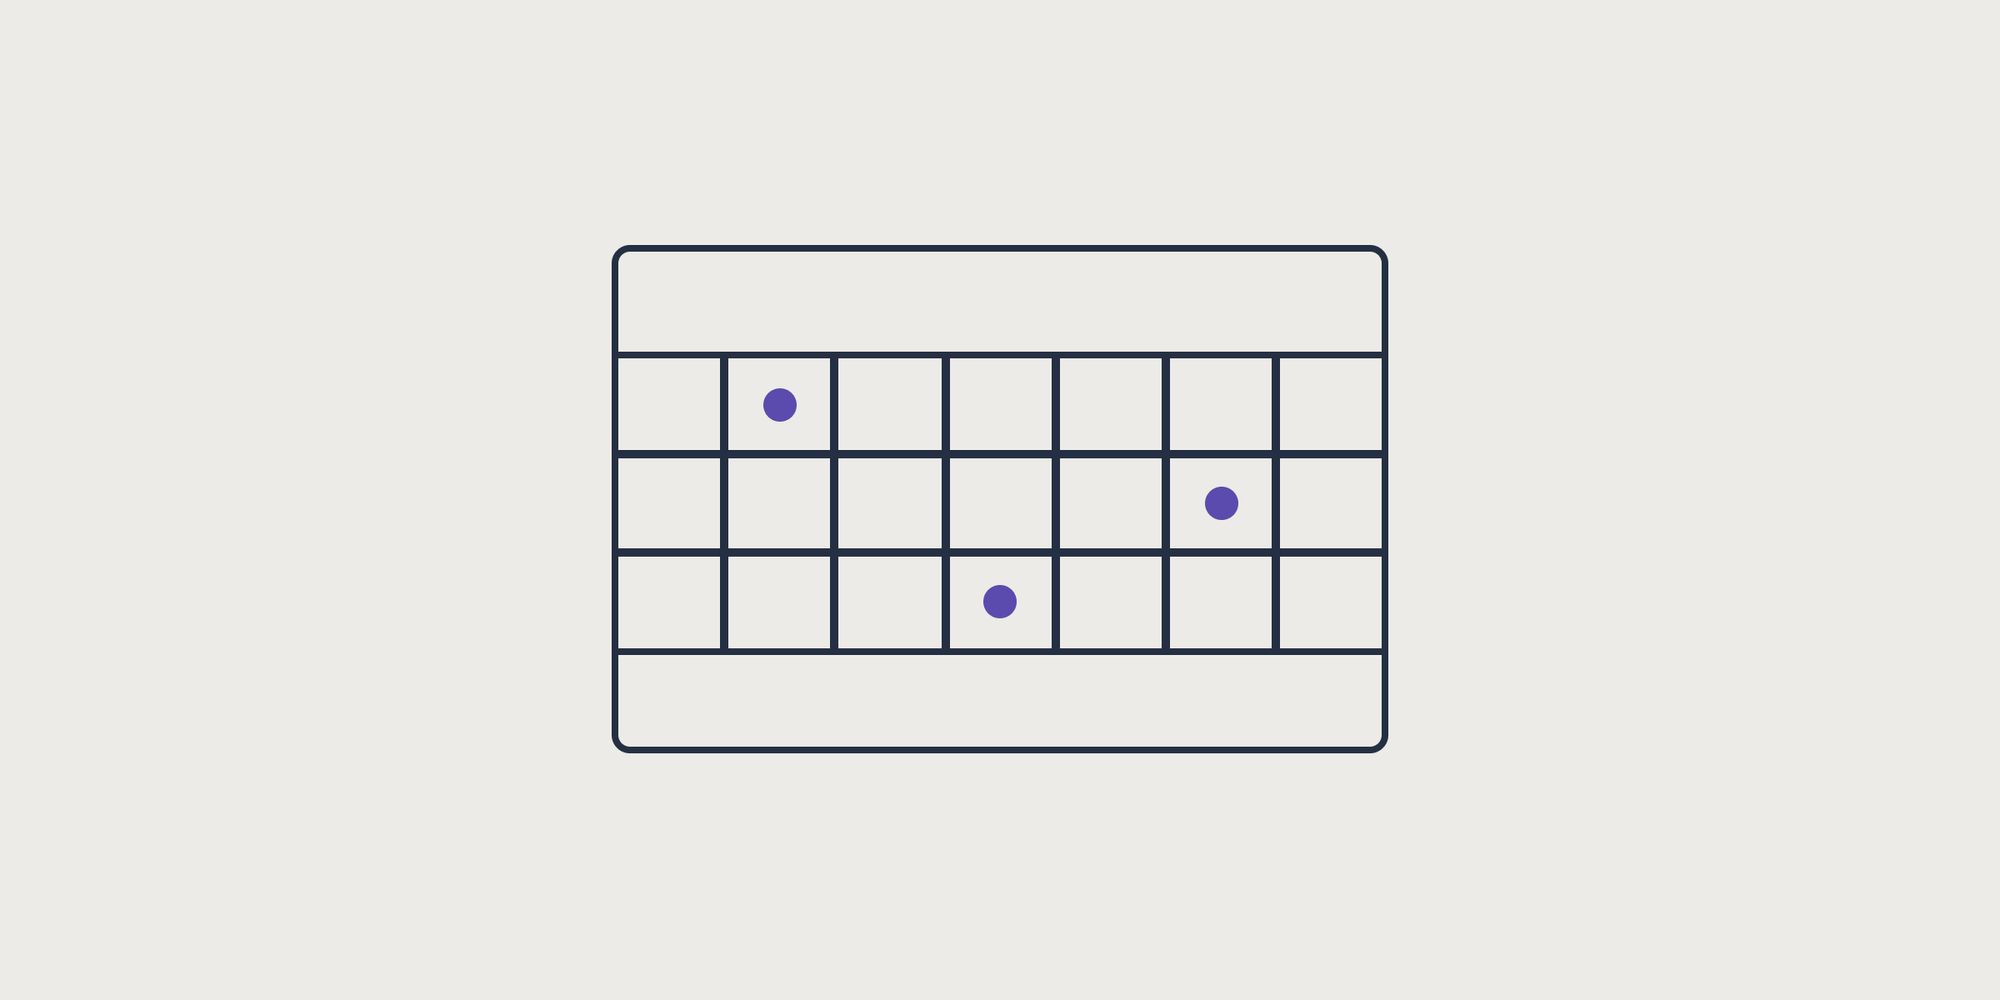 Calendar with 3 purple dots